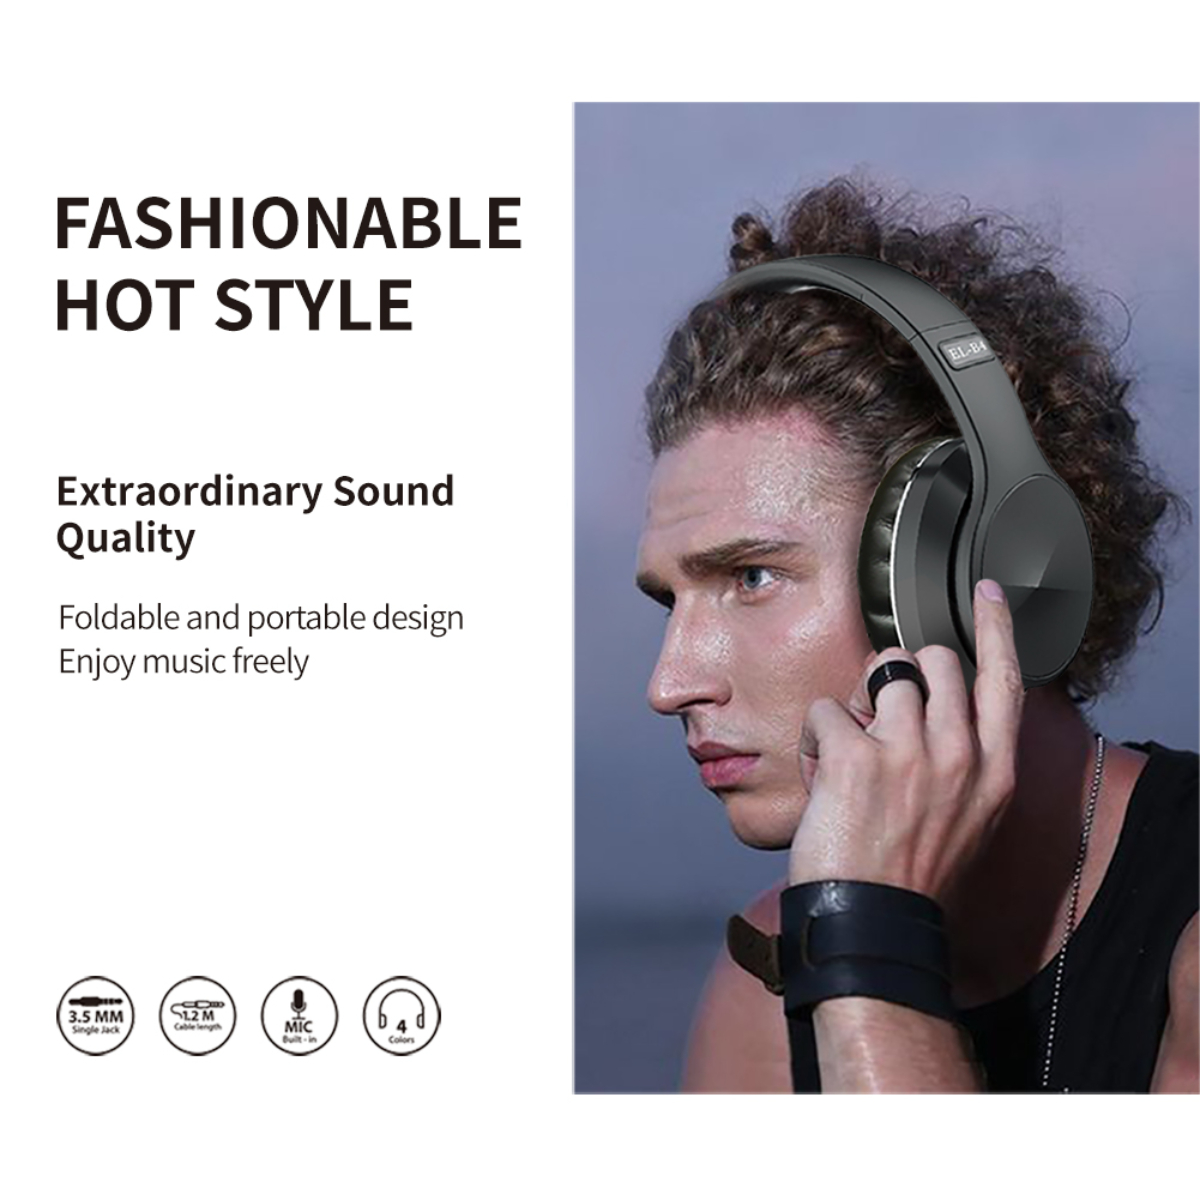 Orange orange Kopfbügel Bass-Stereoklang, Bluetooth kabelloses - Bluetooth-Kopfhörer Bluetooth-Headset Over-ear SYNTEK faltbar,